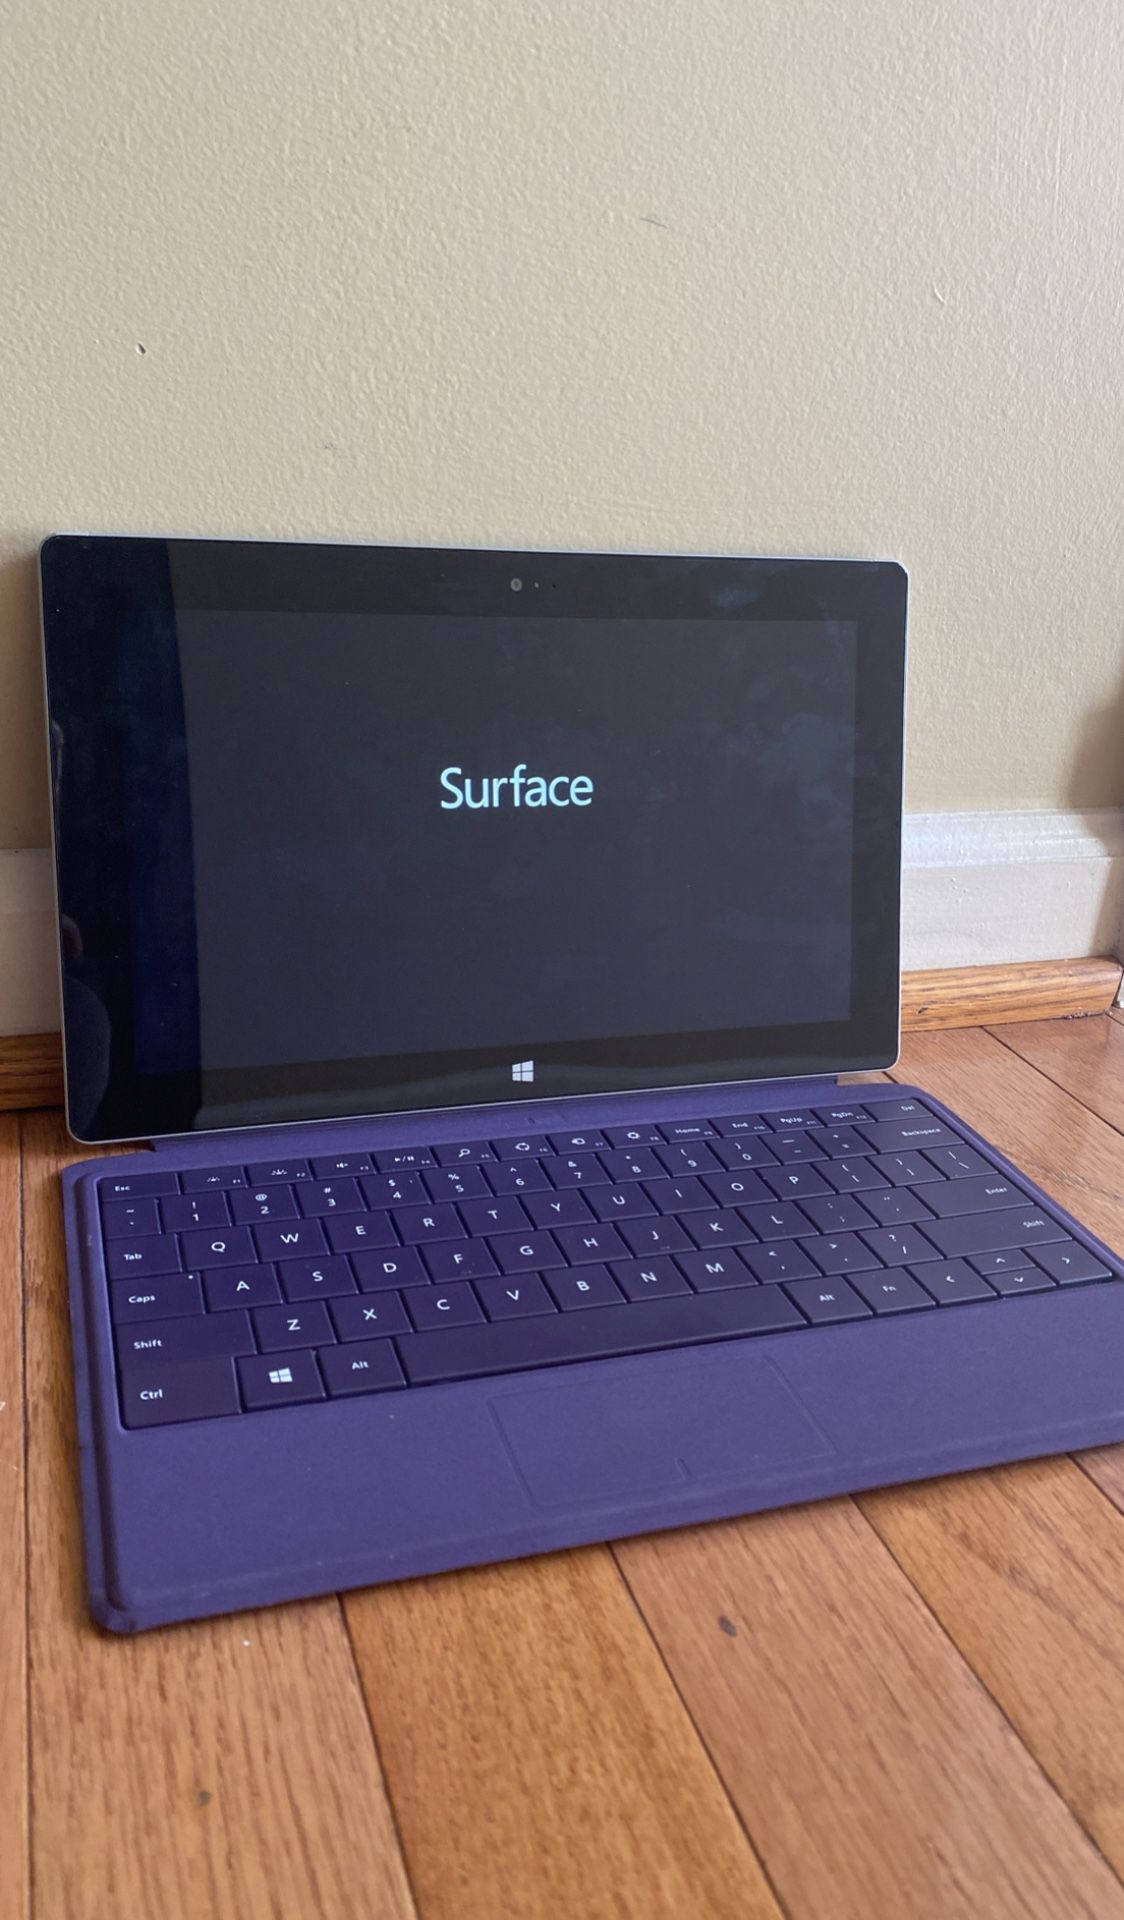 Microsoft Surface Windows